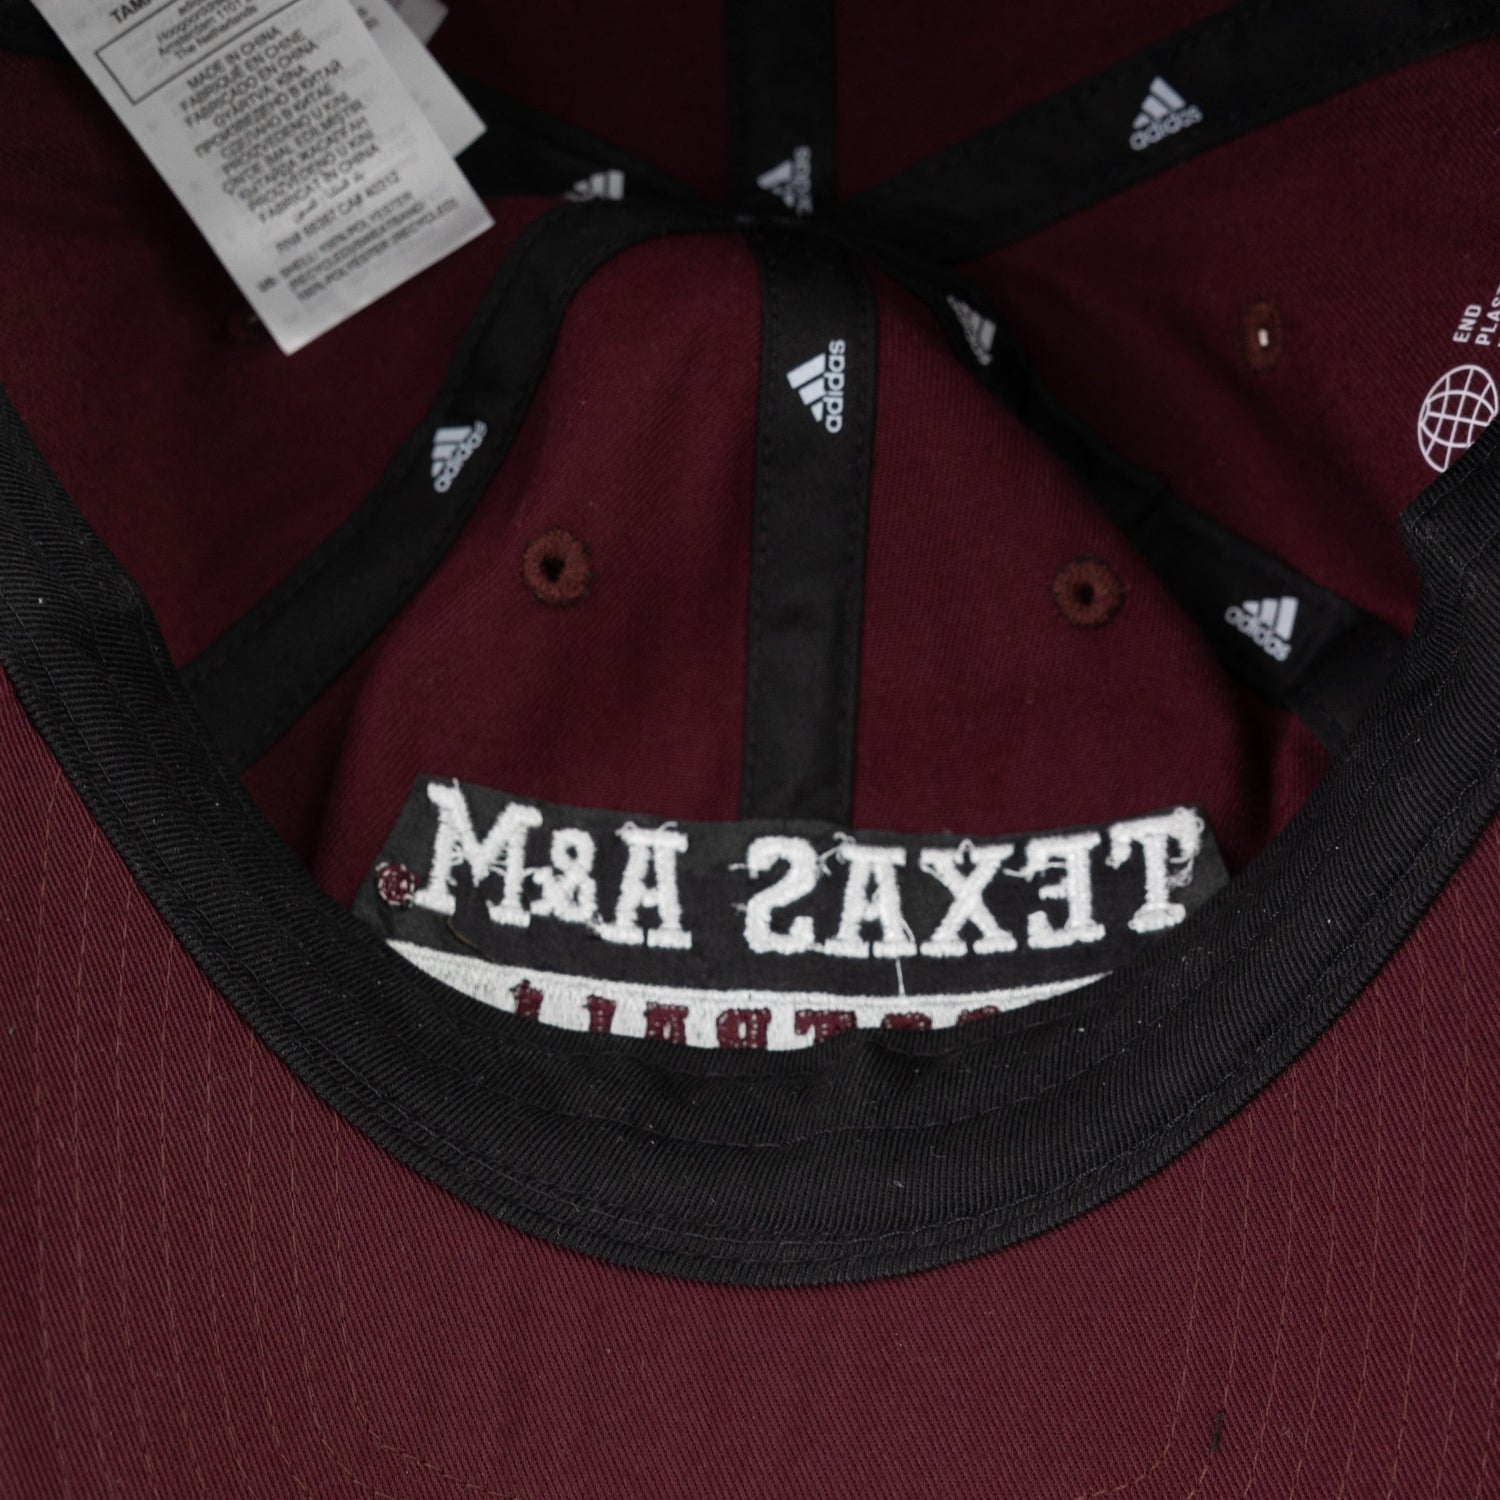 Texas A&M Football Maroon Adidas Slouch Cap